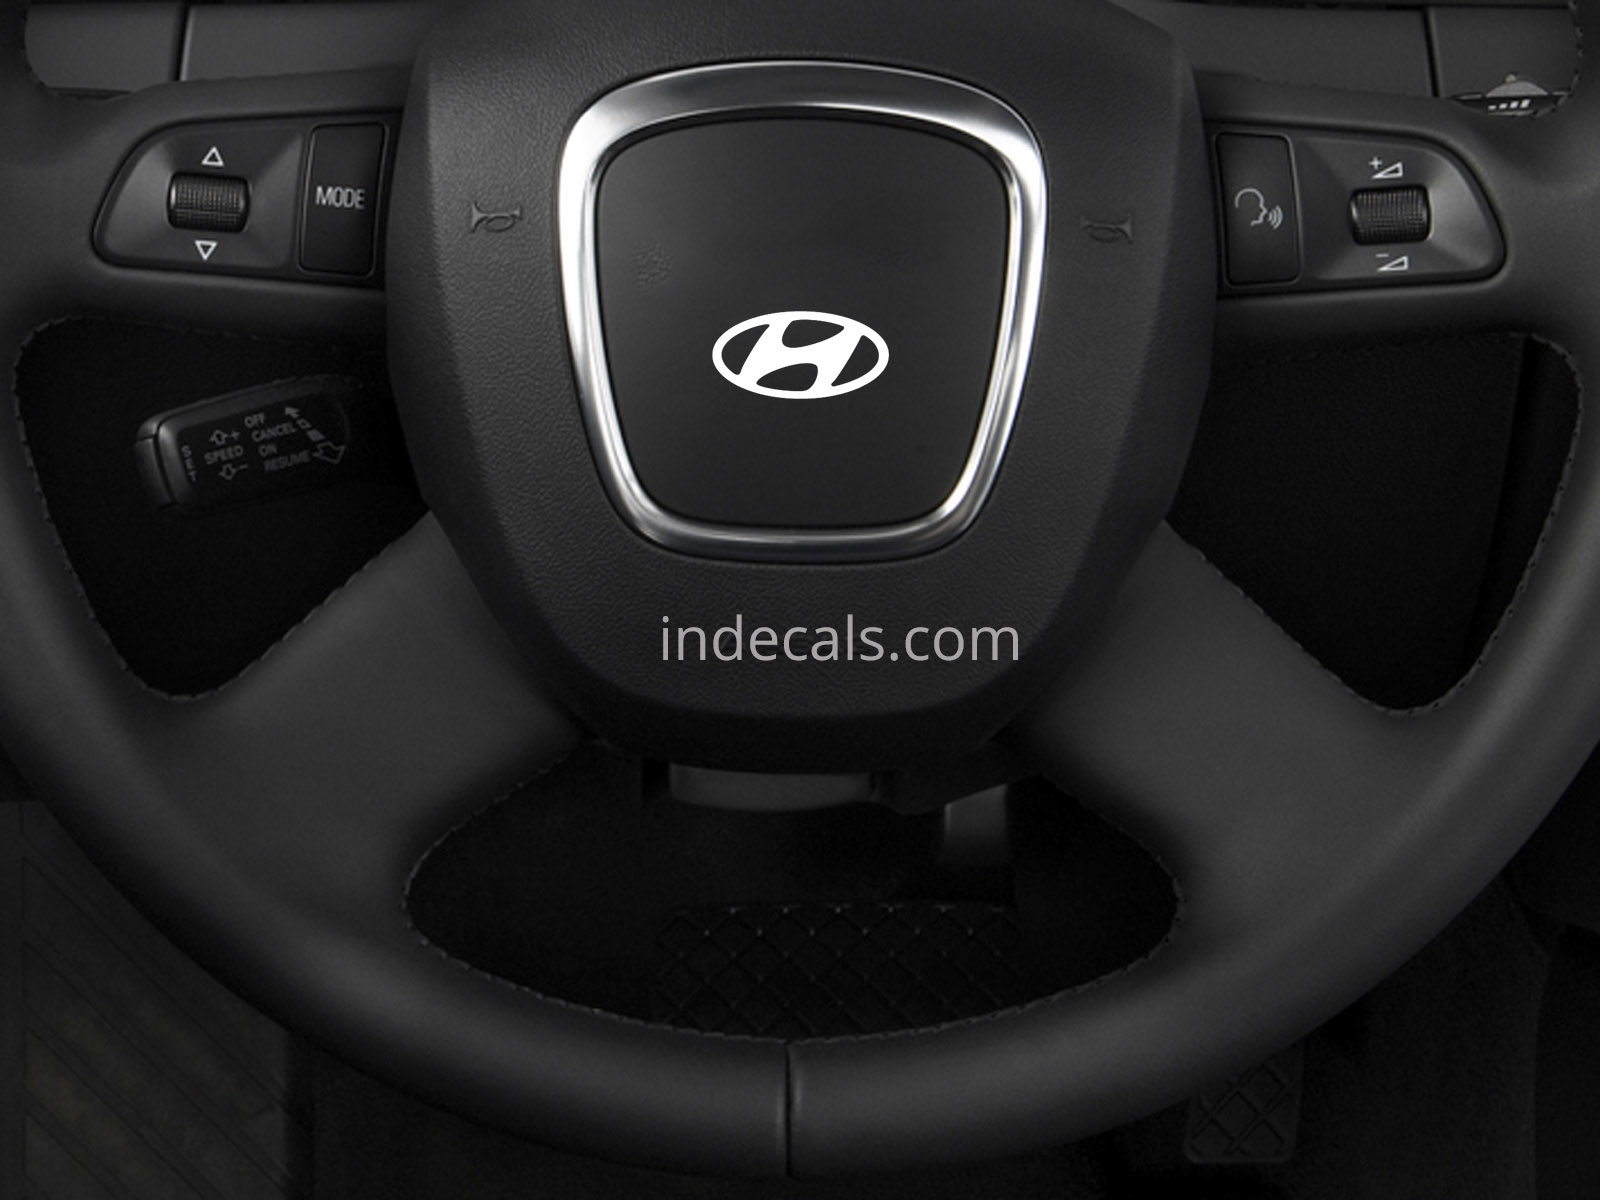 3 x Hyundai Stickers for Steering Wheel - White